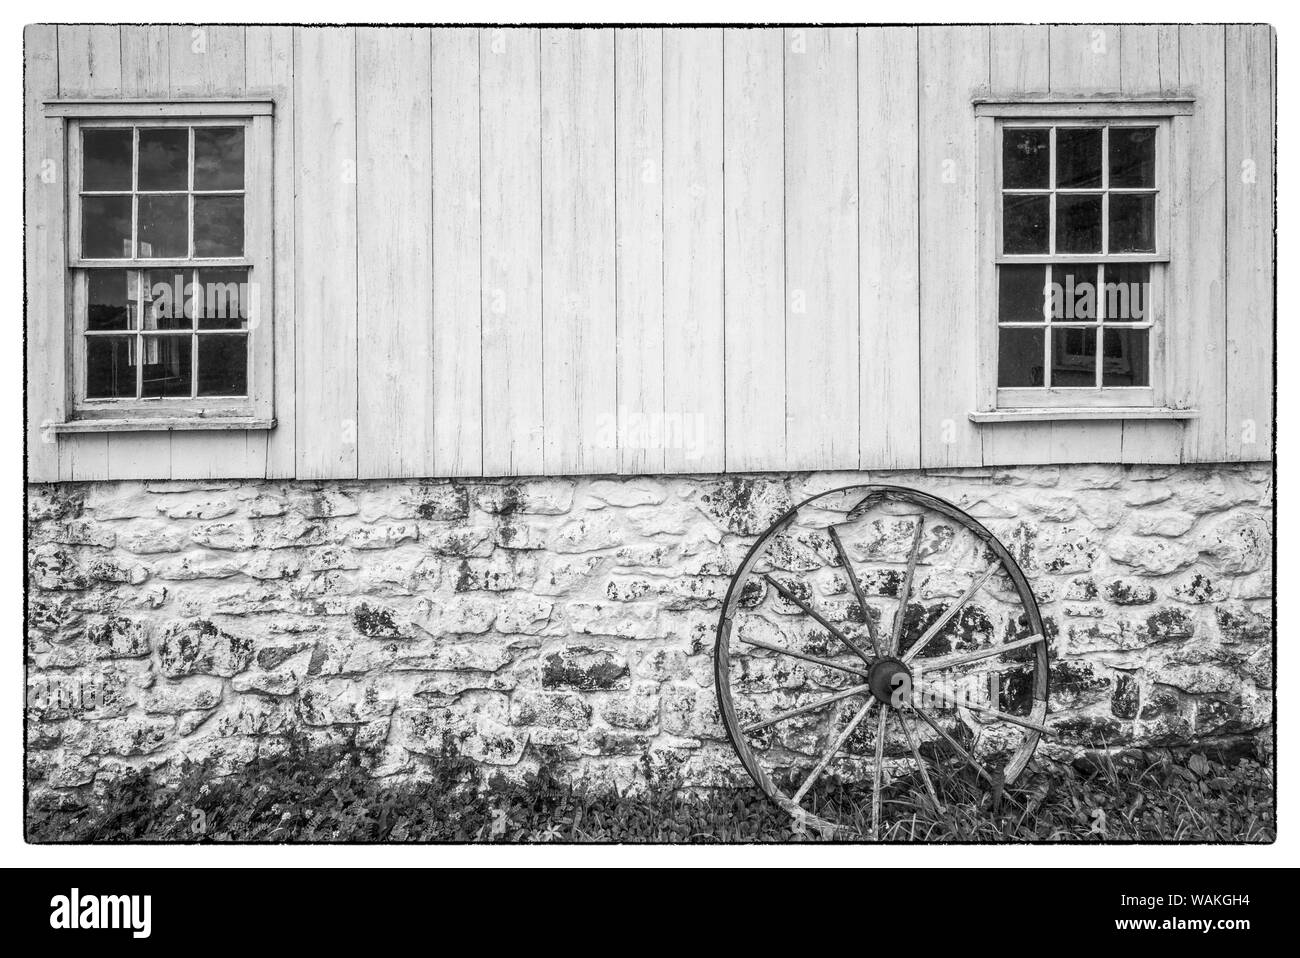 USA, Pennsylvania, Elverson. Hopewell Furnace National Historic Site, early 18th century ironmaking plantation, barn and wagon wheel Stock Photo